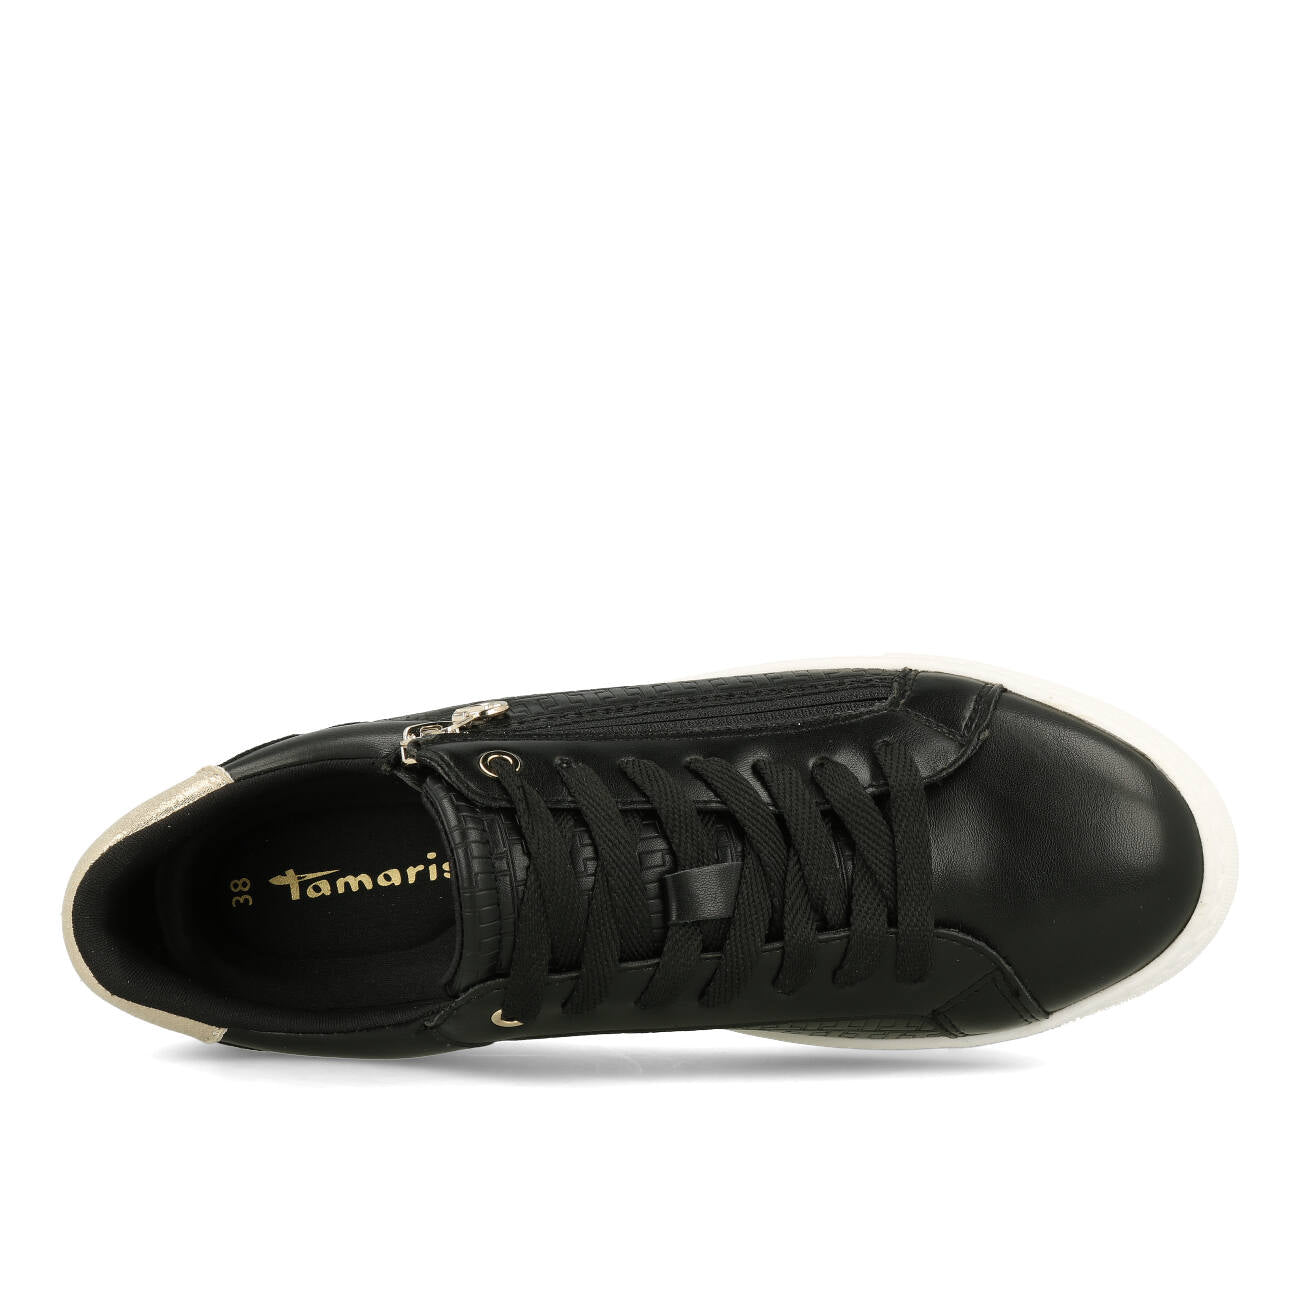 Tamaris 1-23313-41-048 Sneaker Damen Black Gold